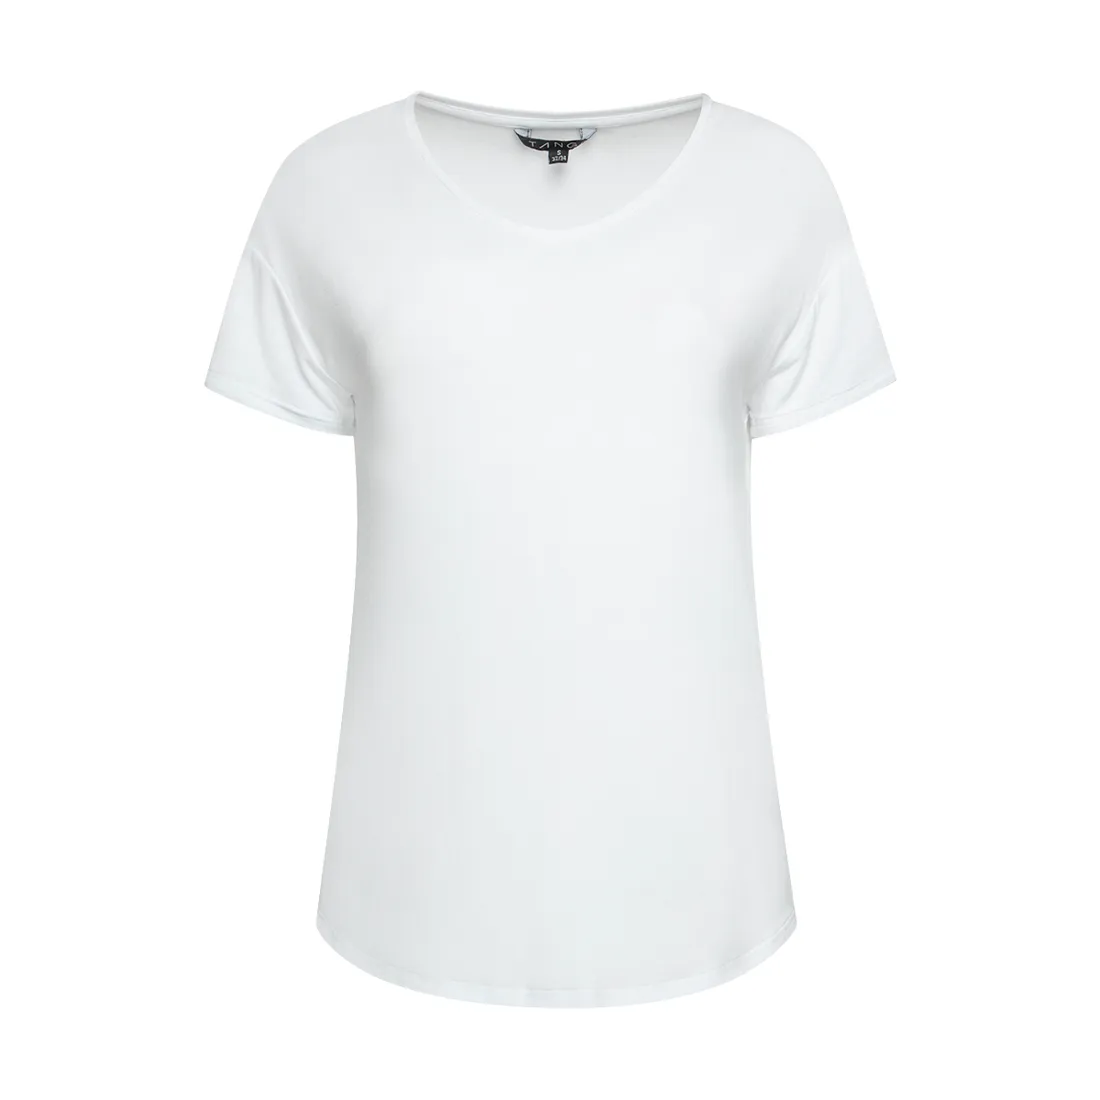 V-neck t-shirt white - Women's Short Sleeve T-Shirts | Ackermans